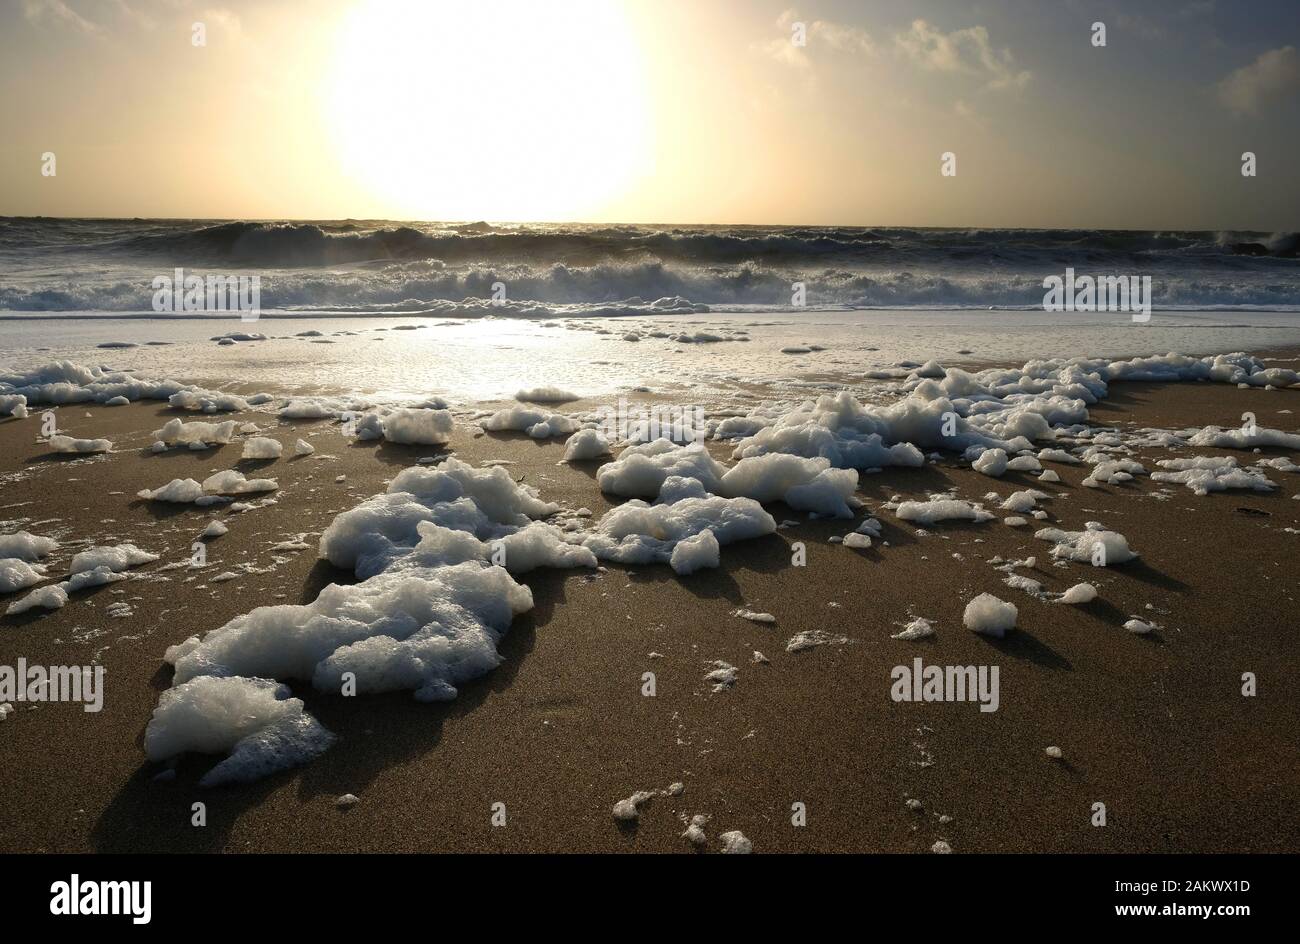 Spume, also known as sea foam, ocean foam or beach foam at Gunwalloe beach, Cornwall, UK - John Gollop Stock Photo